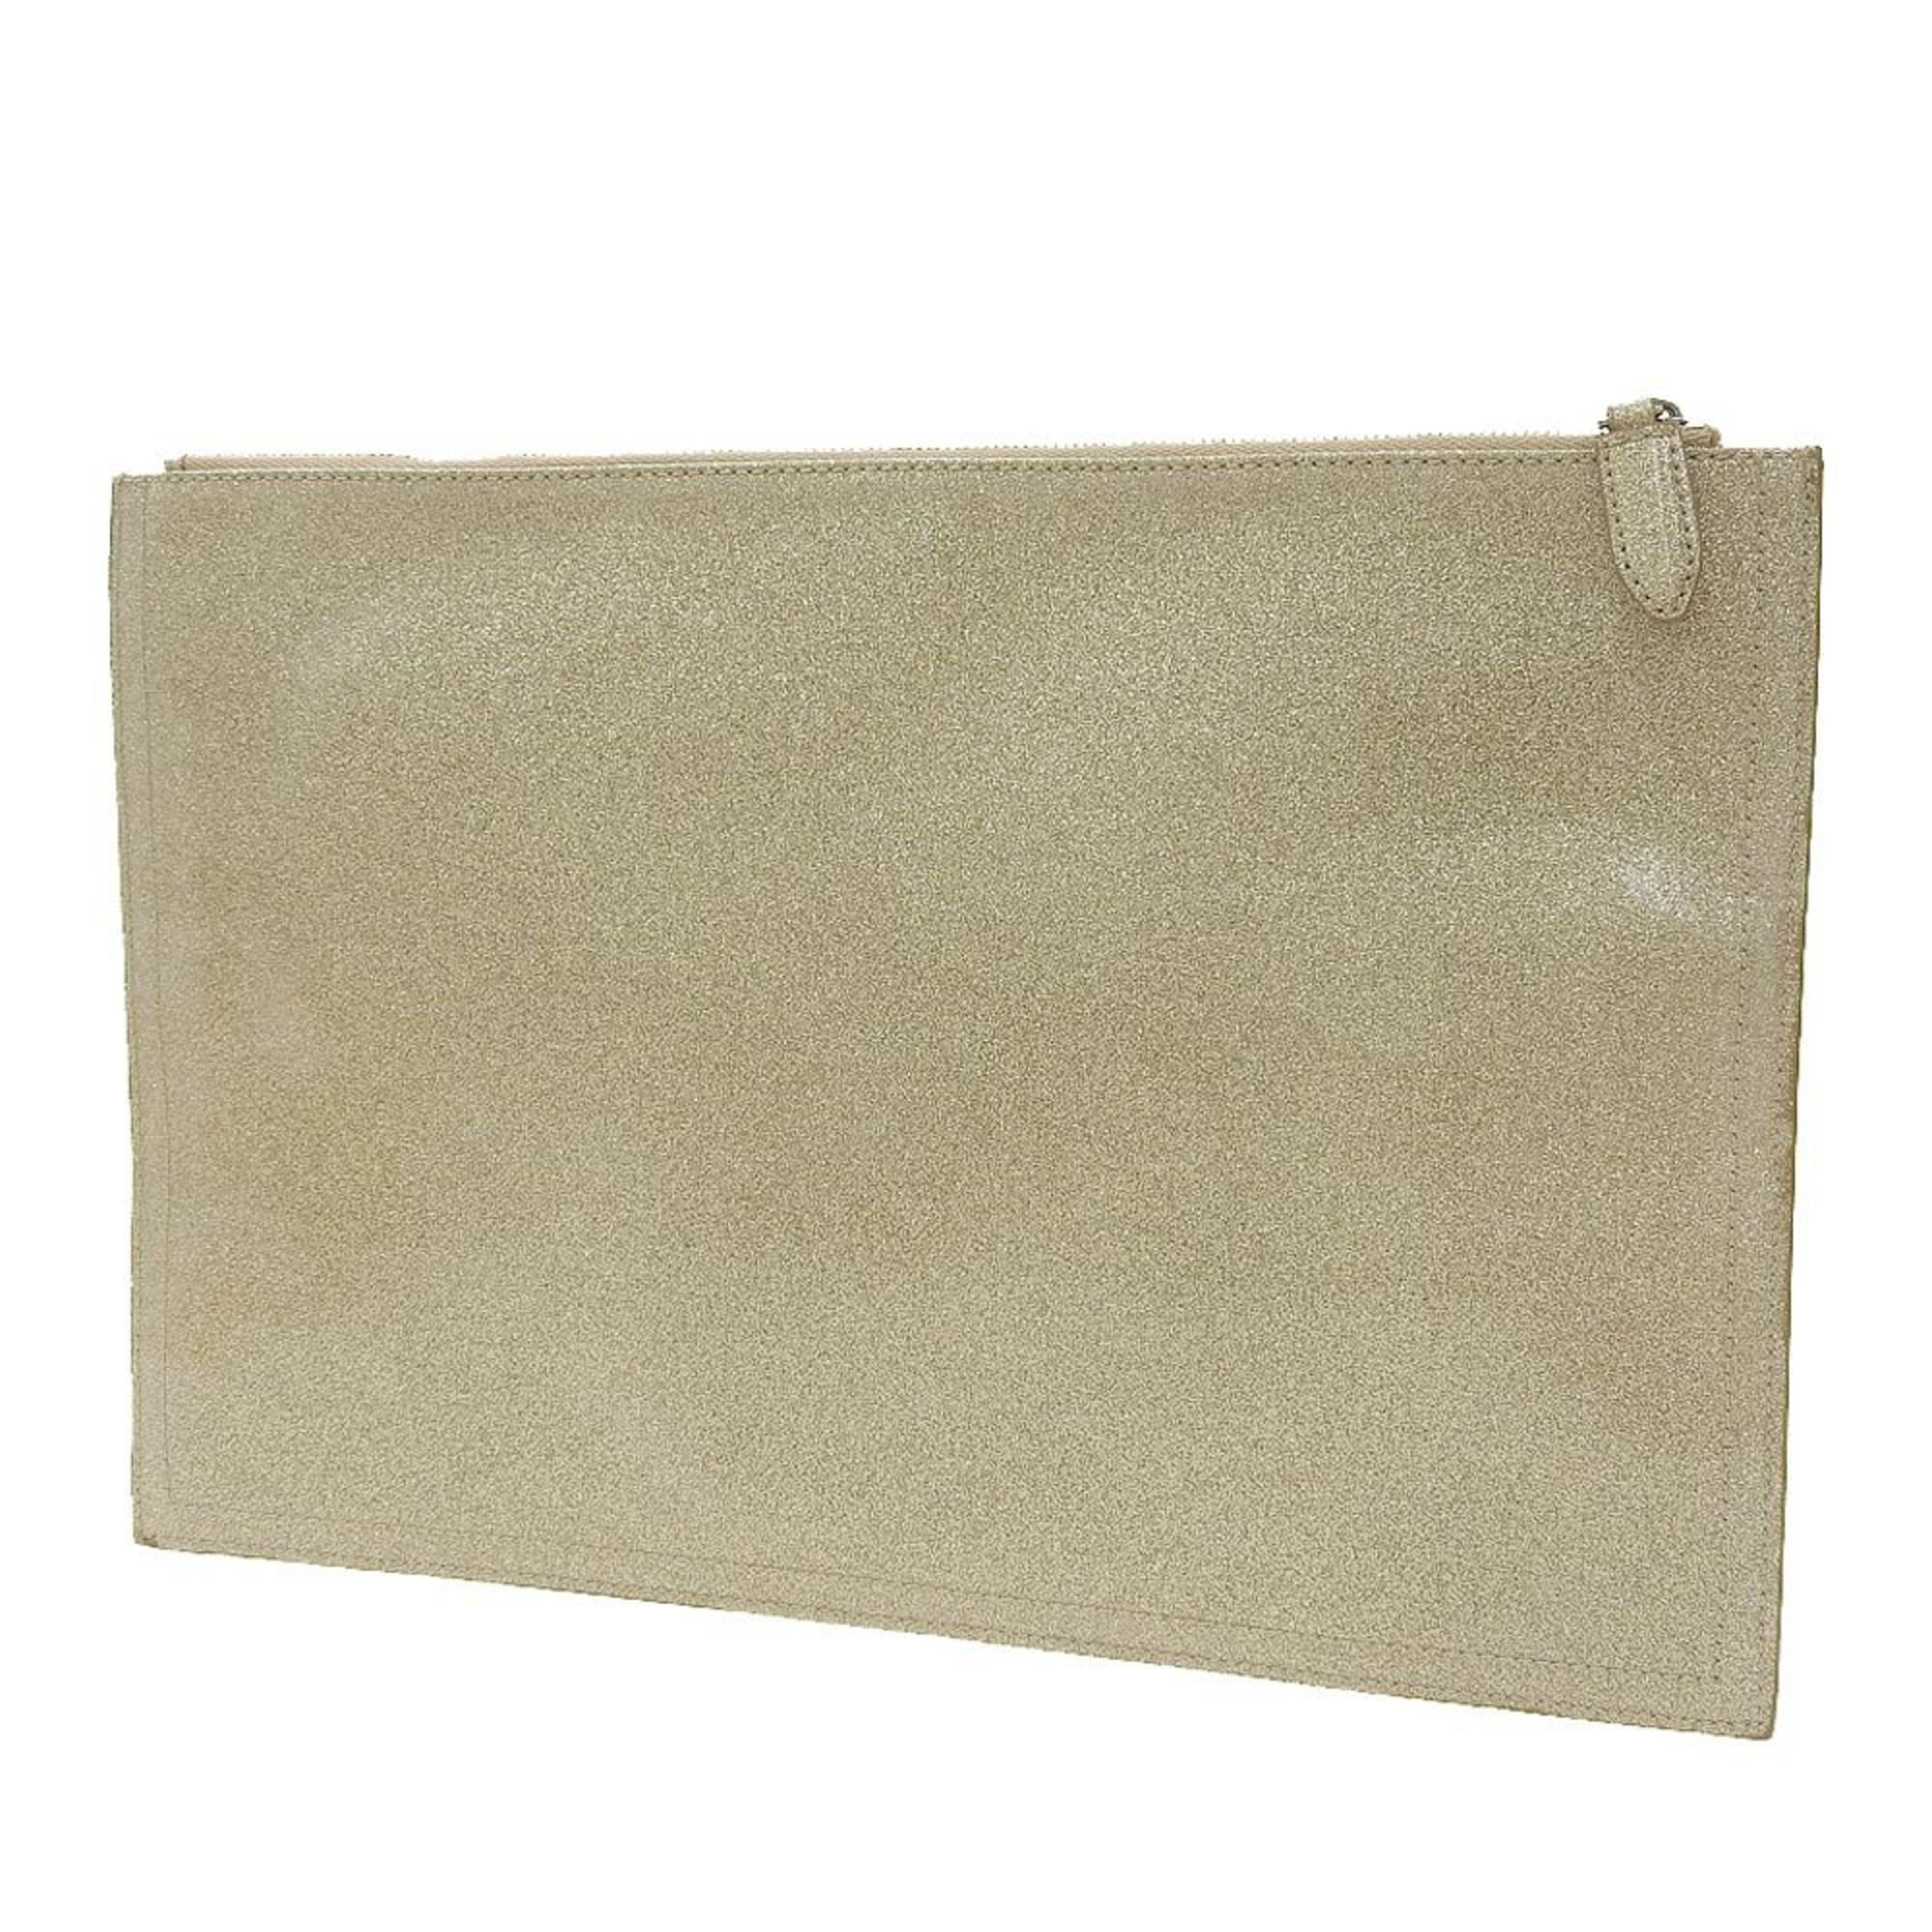 Givenchy GIVENCHY Antigona 2015 limited clutch bag patent leather glitter